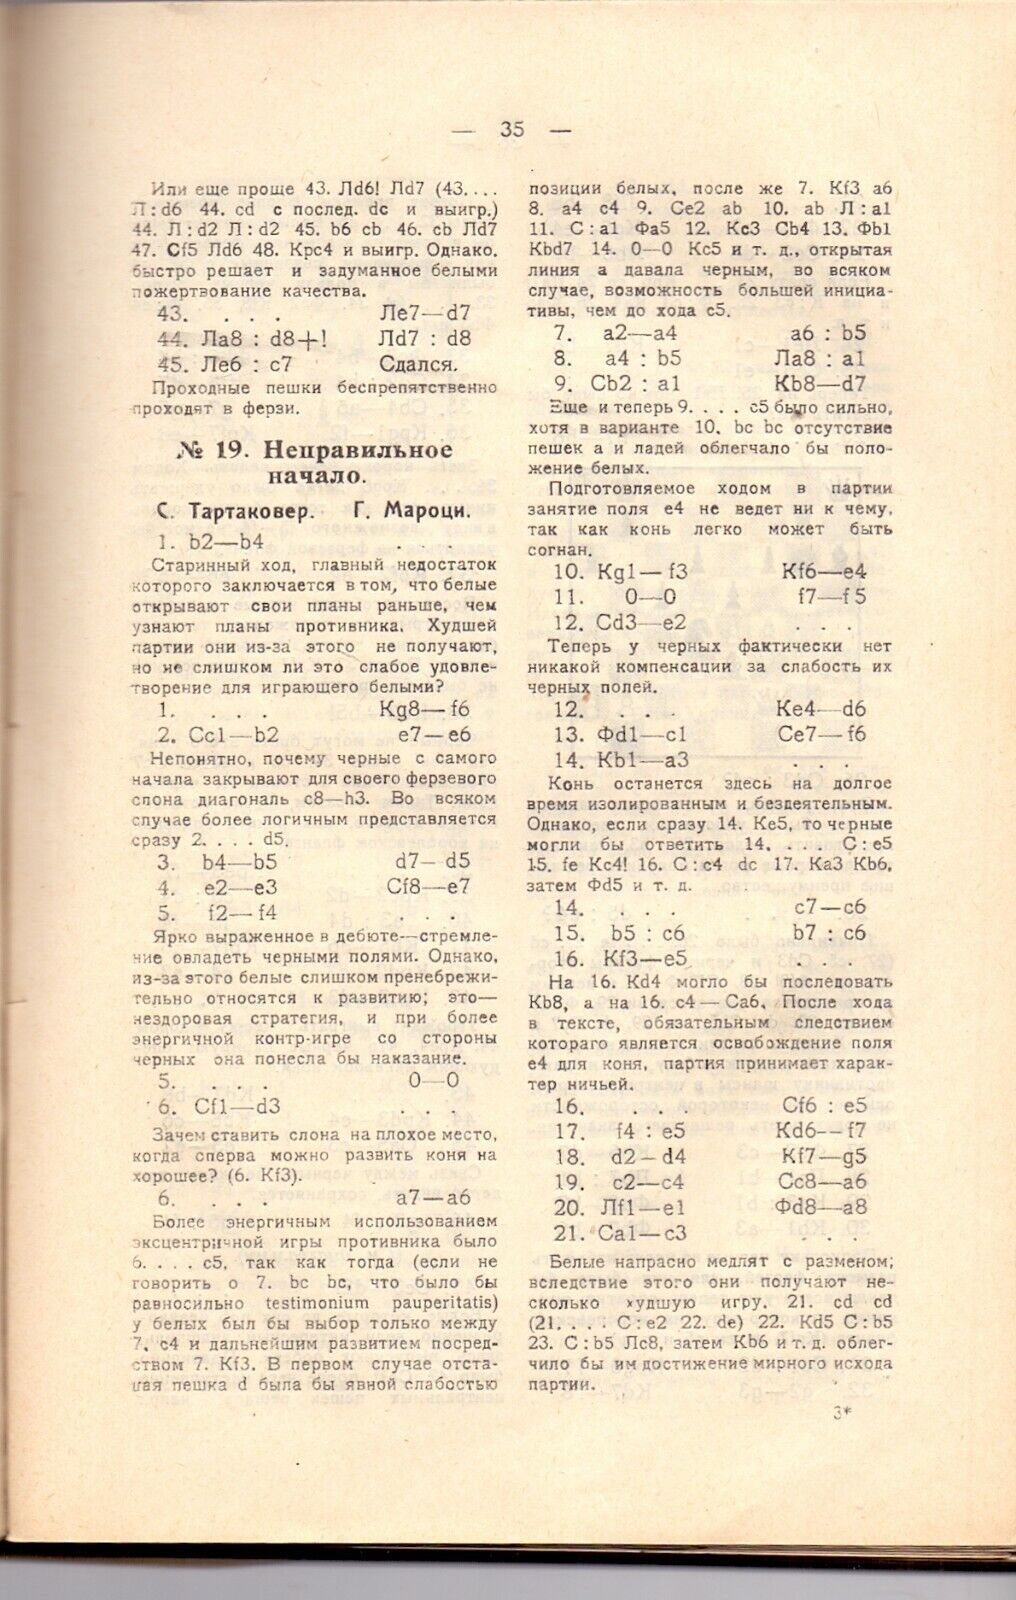 11096.Chess Book: N.Grekov, V.Nenarokov. York 1924 International Chess Tournament 1925